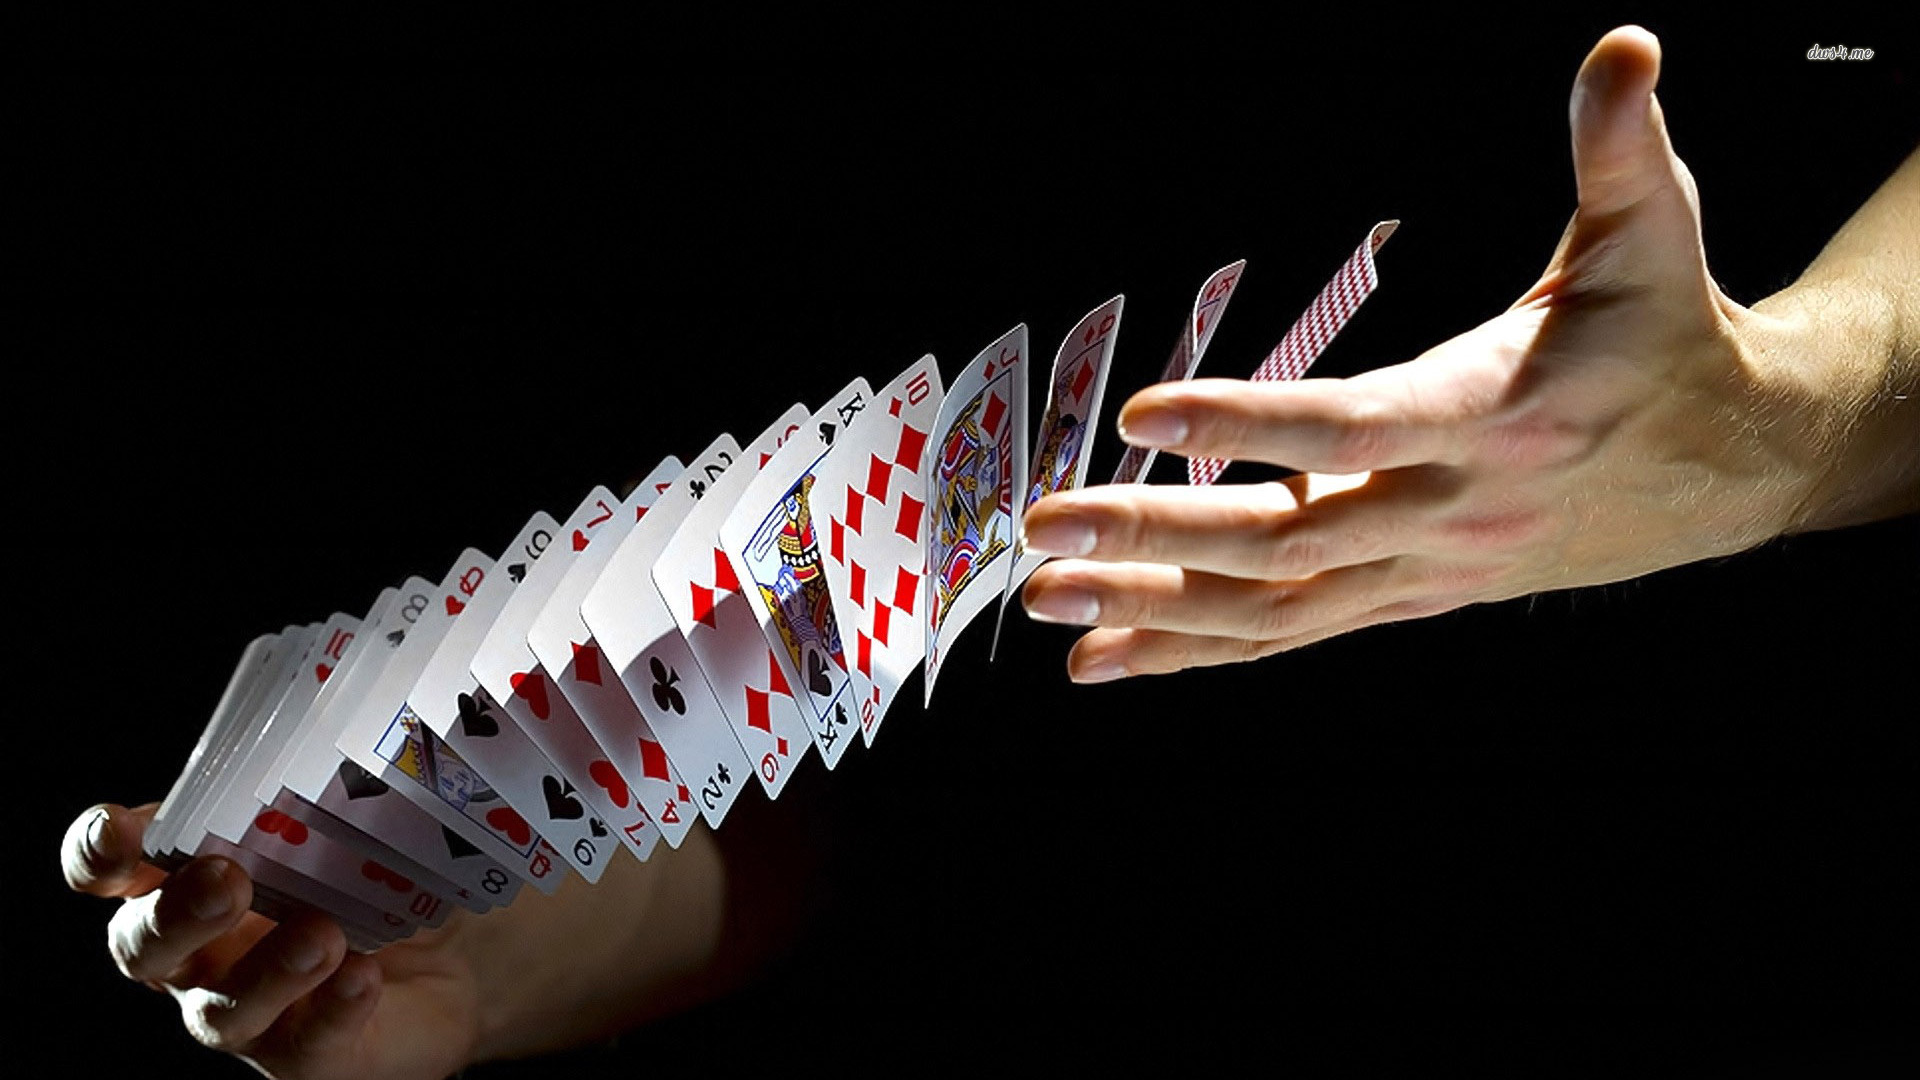 Shuffle Hand Cards Playing Deck Poker Game - カード シャッフル - 1366x768 Wallpaper  